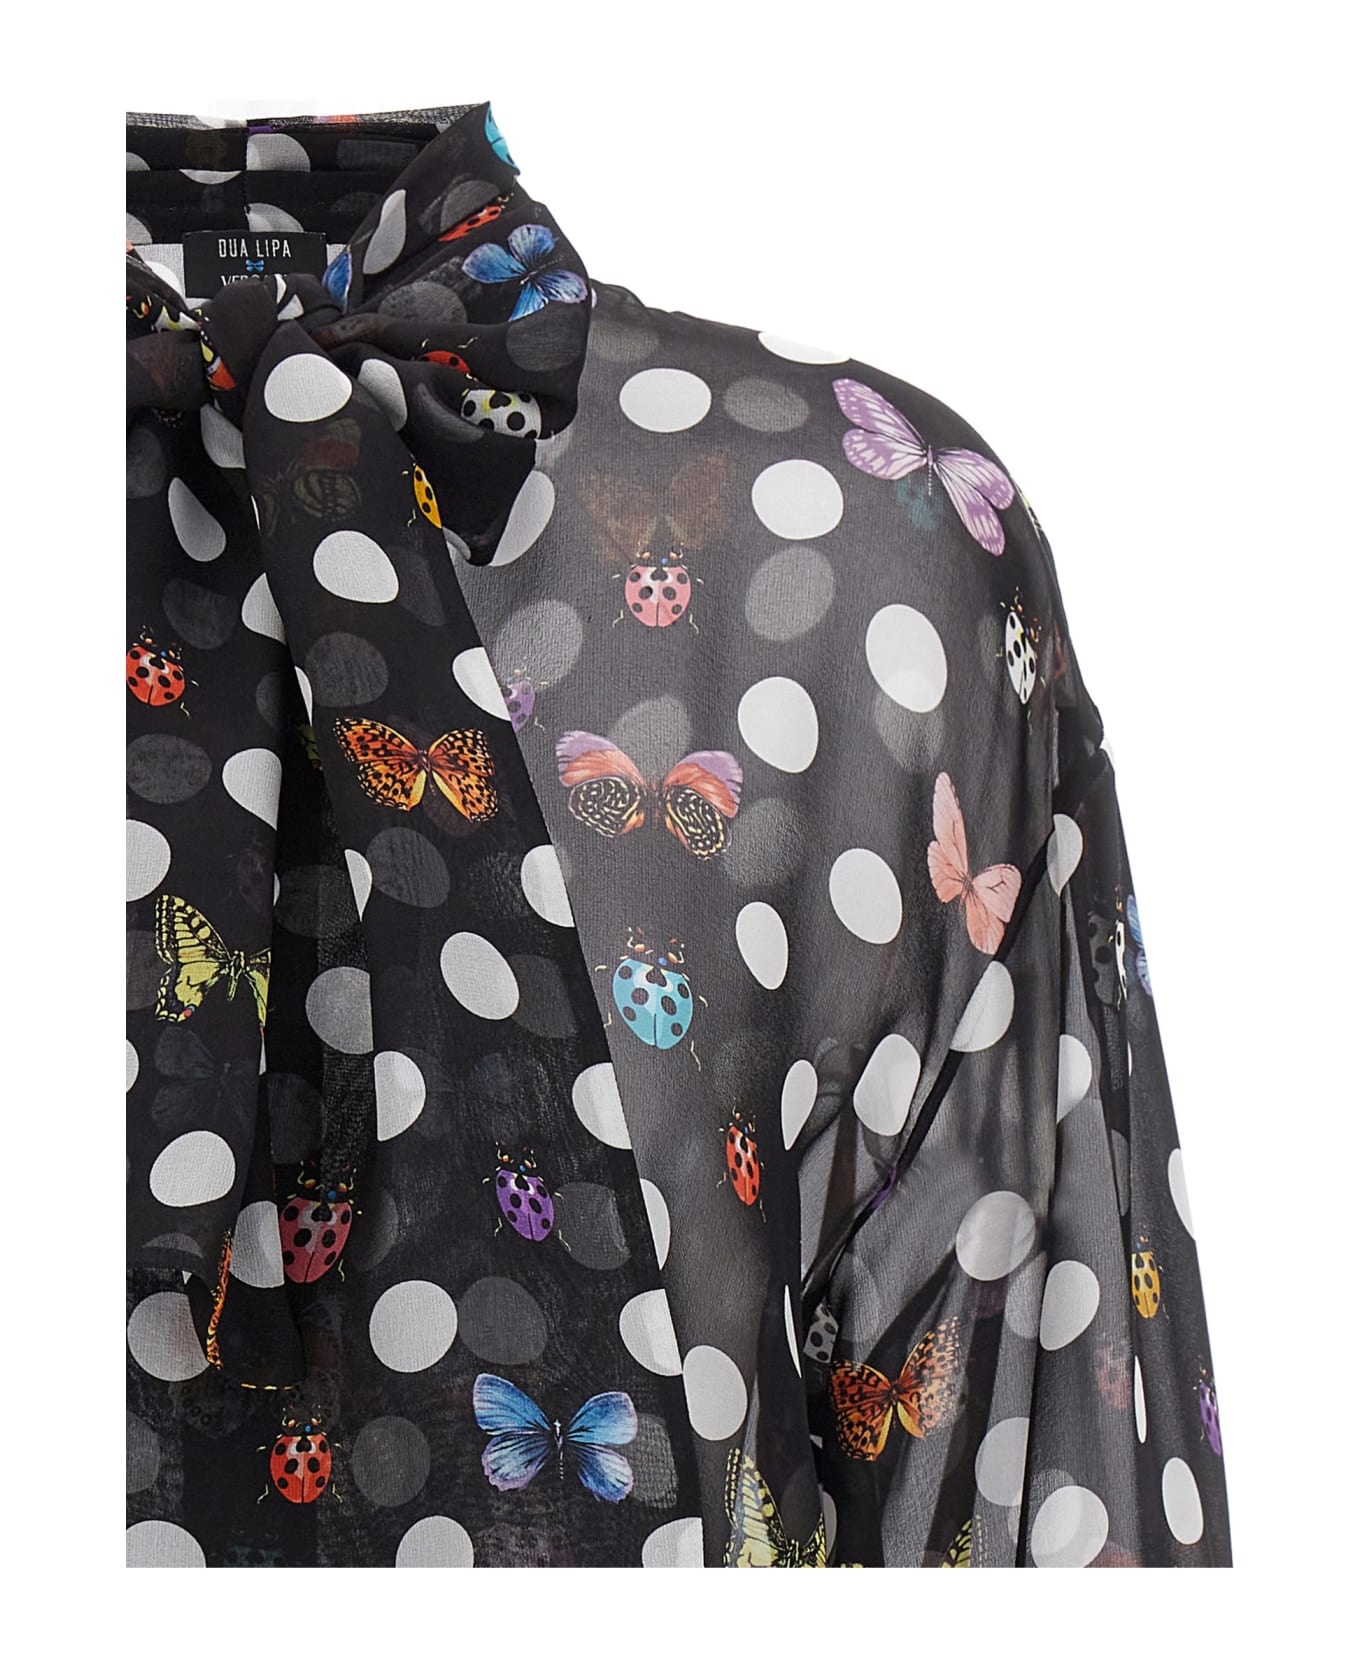 Versace Butterfly And Polka Dot Print Shirt - Black